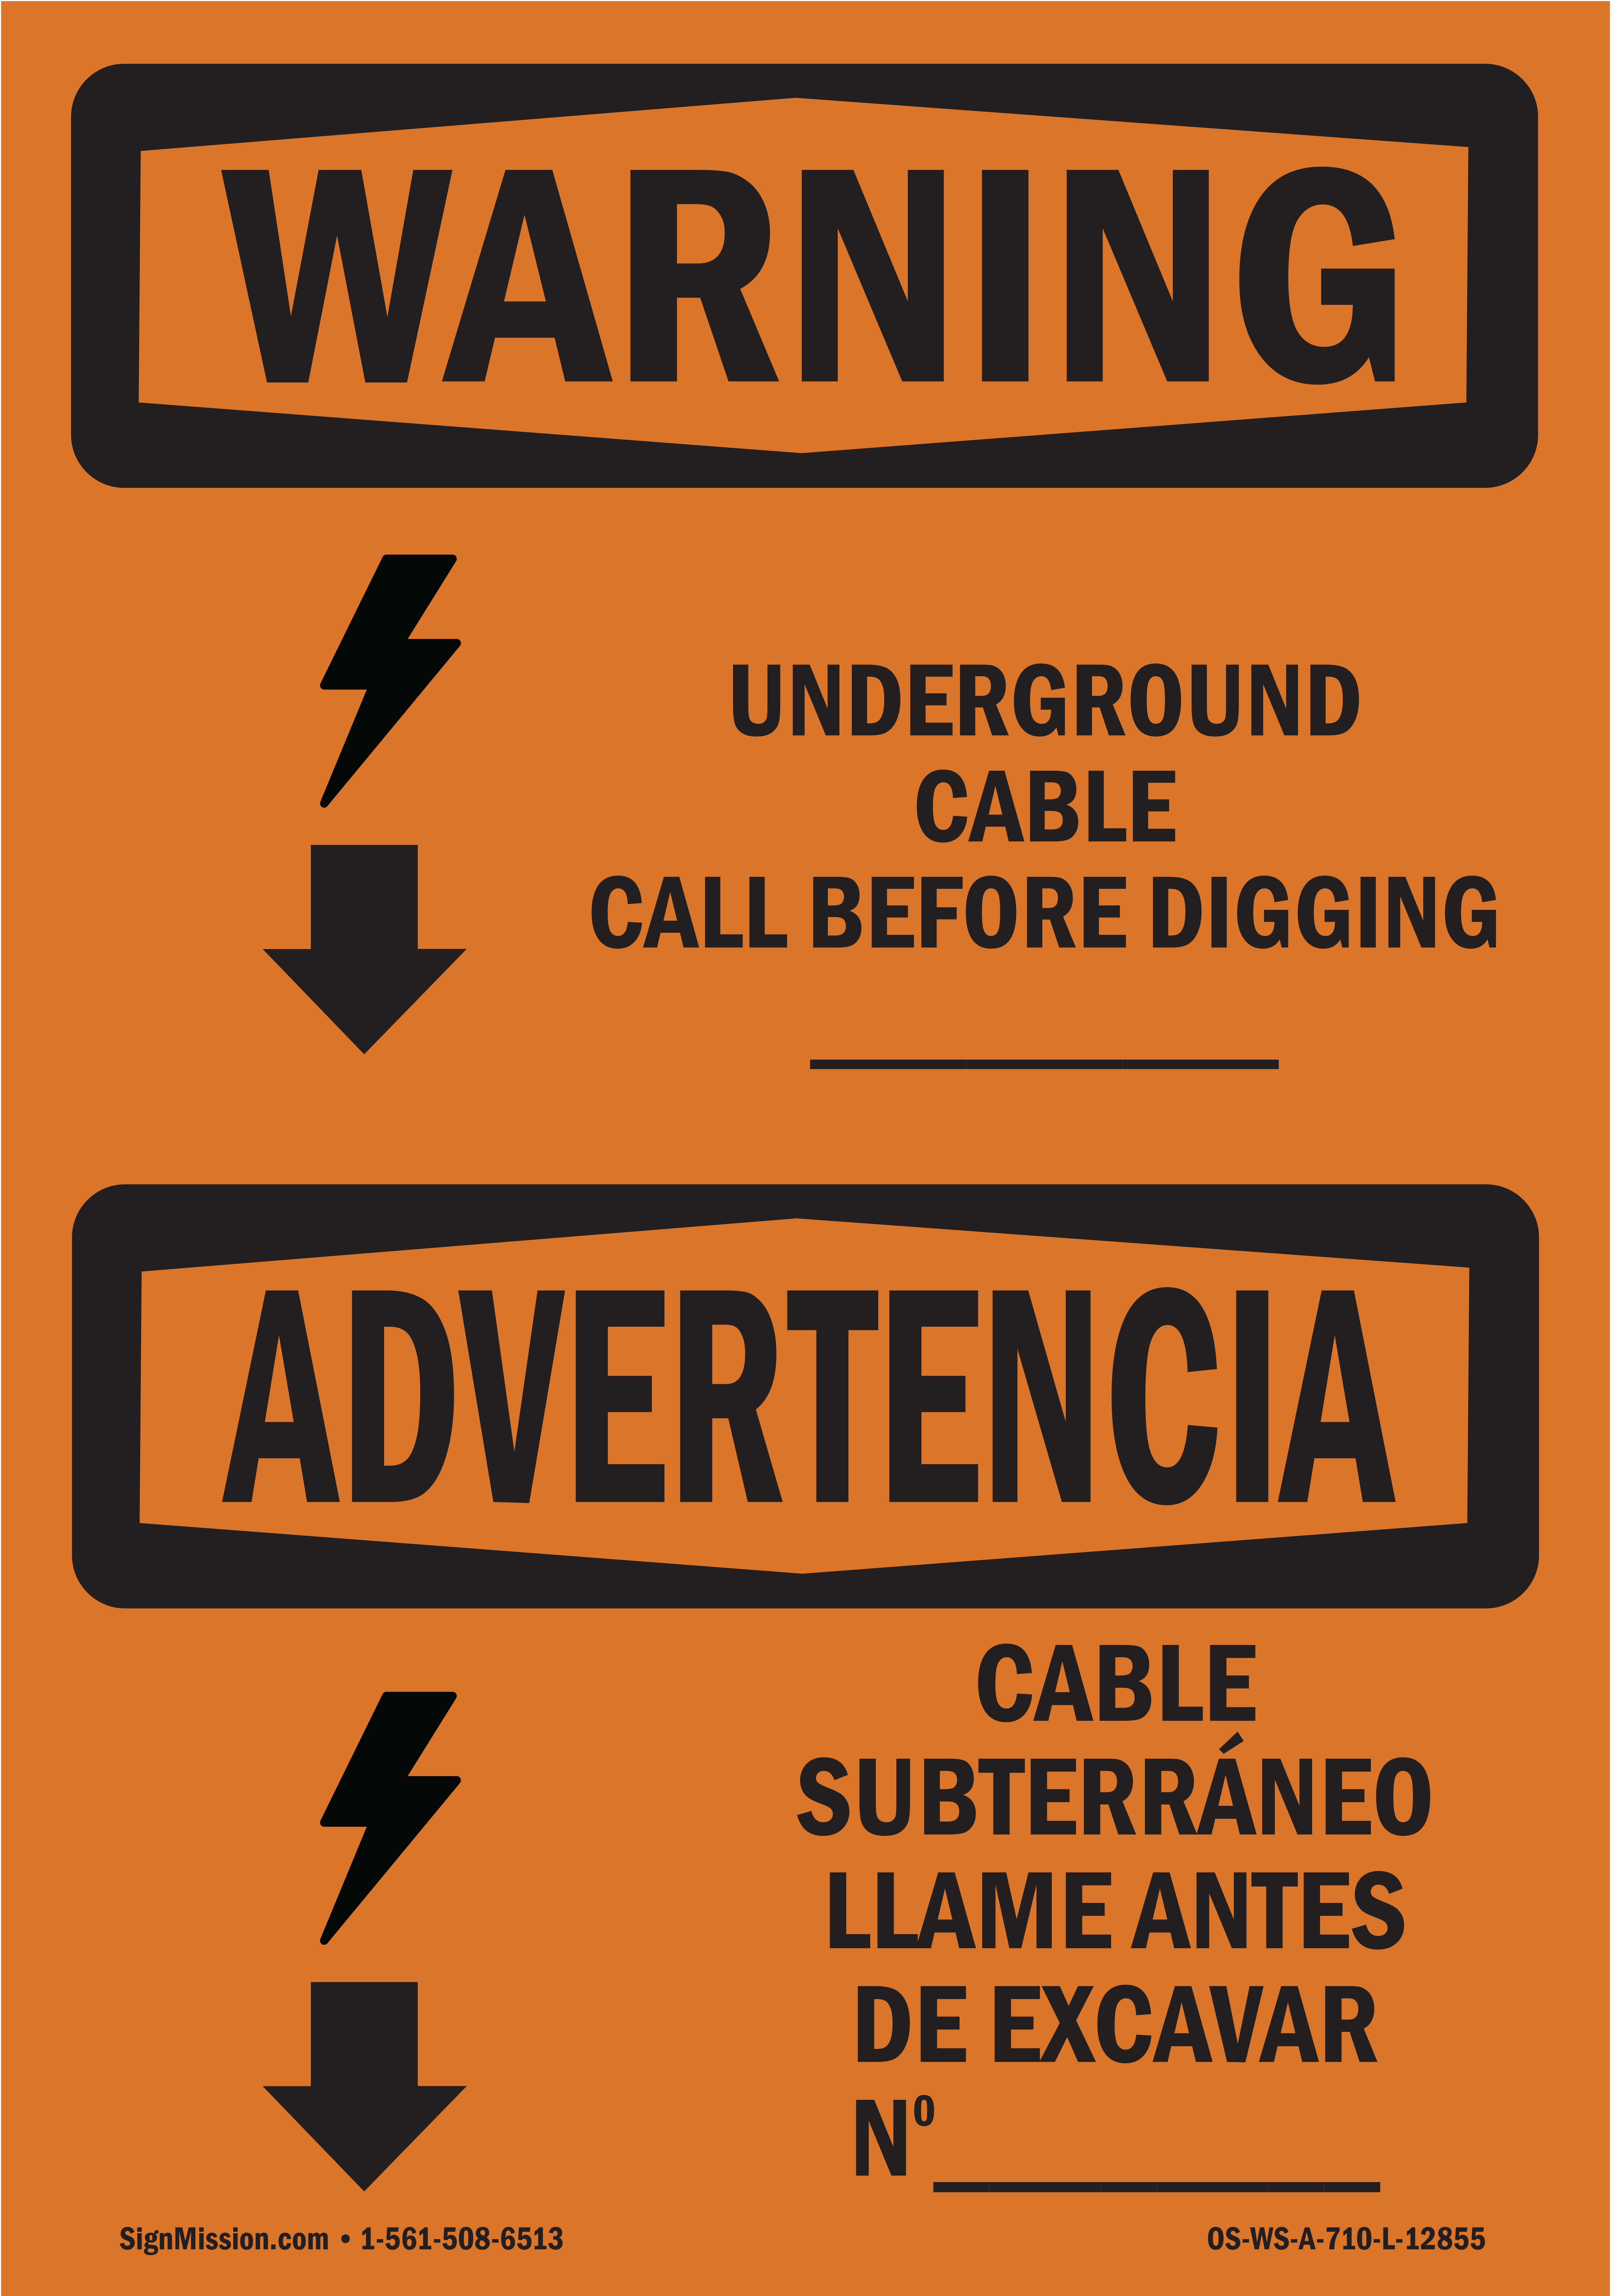 Line Work In Progress Do Not Energize OSHA Warning Utility Pole Wrap FMG302